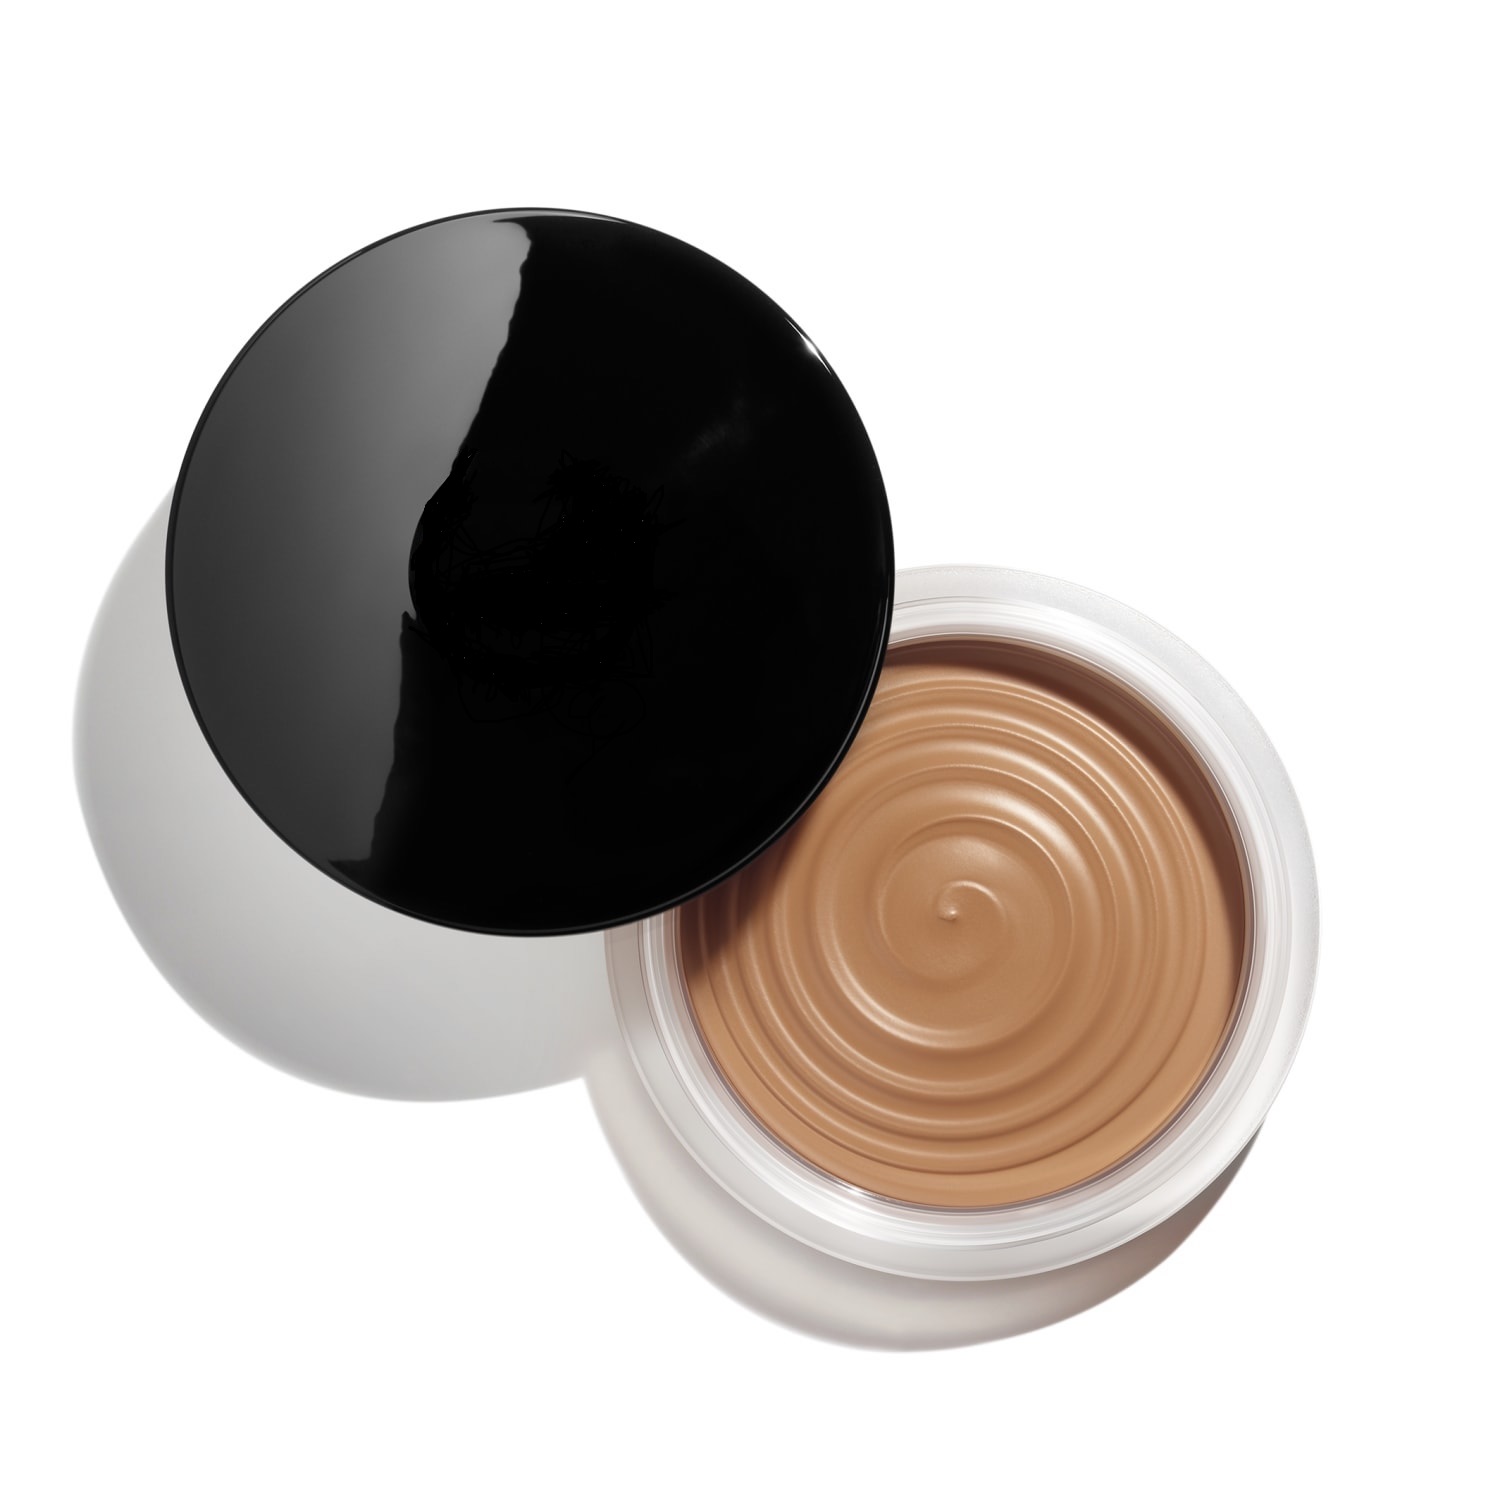 100% natural sun-kissed glow makeup deep bronzer cream